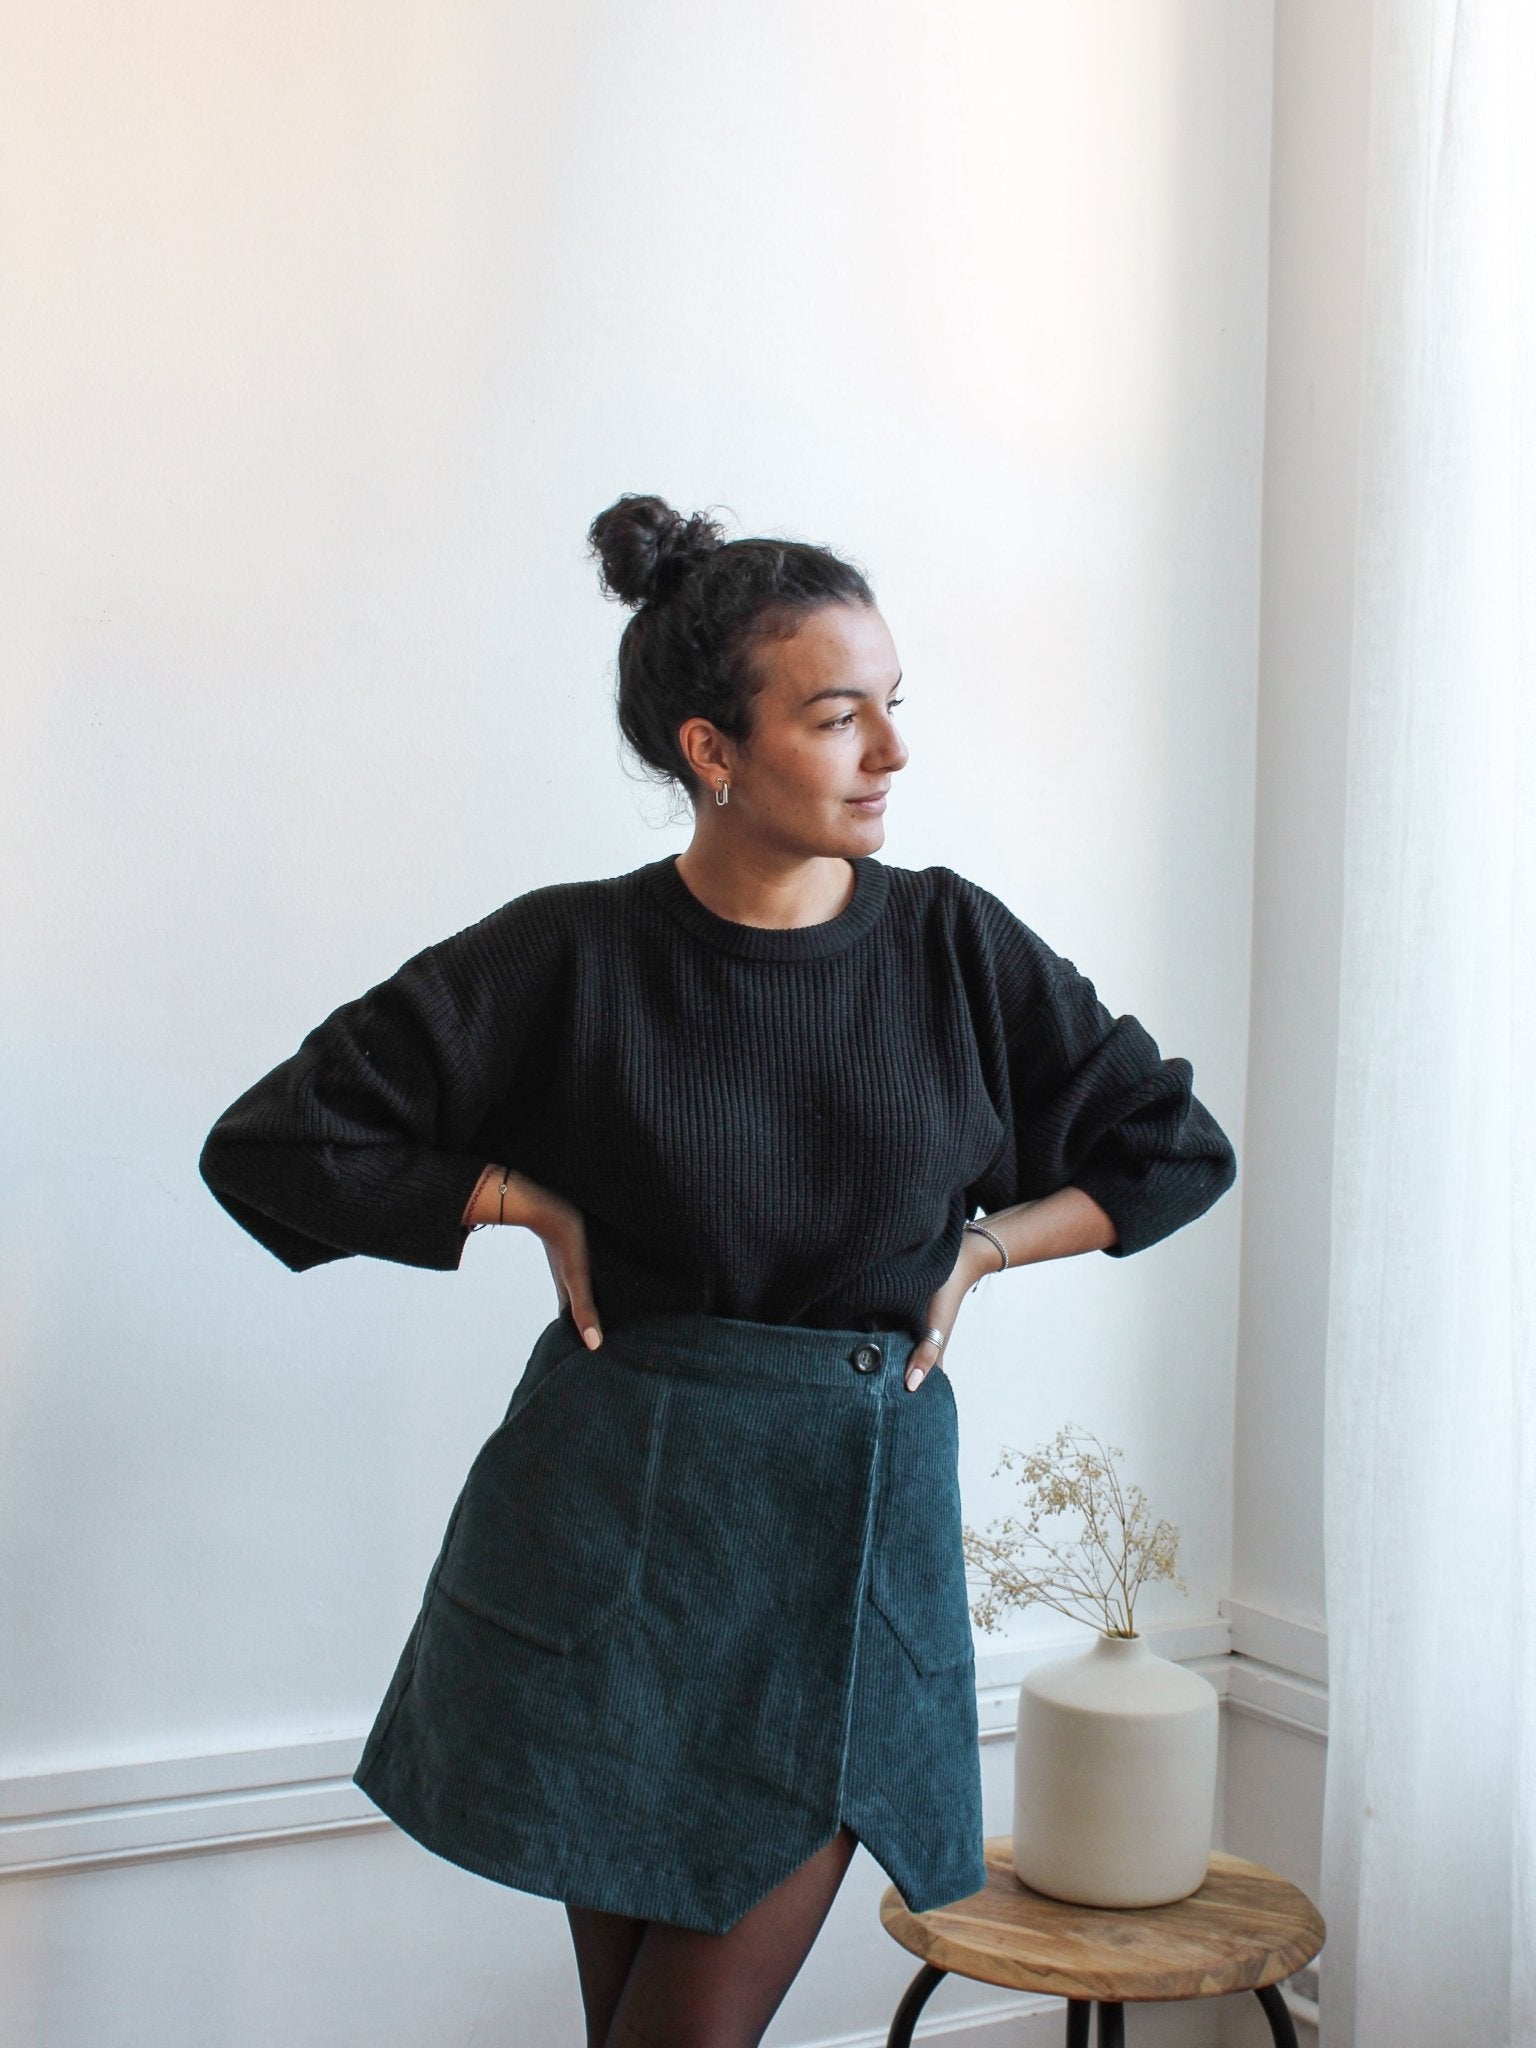 Dottie Skirt - pattern Couture PDF or paper - Joli Lab